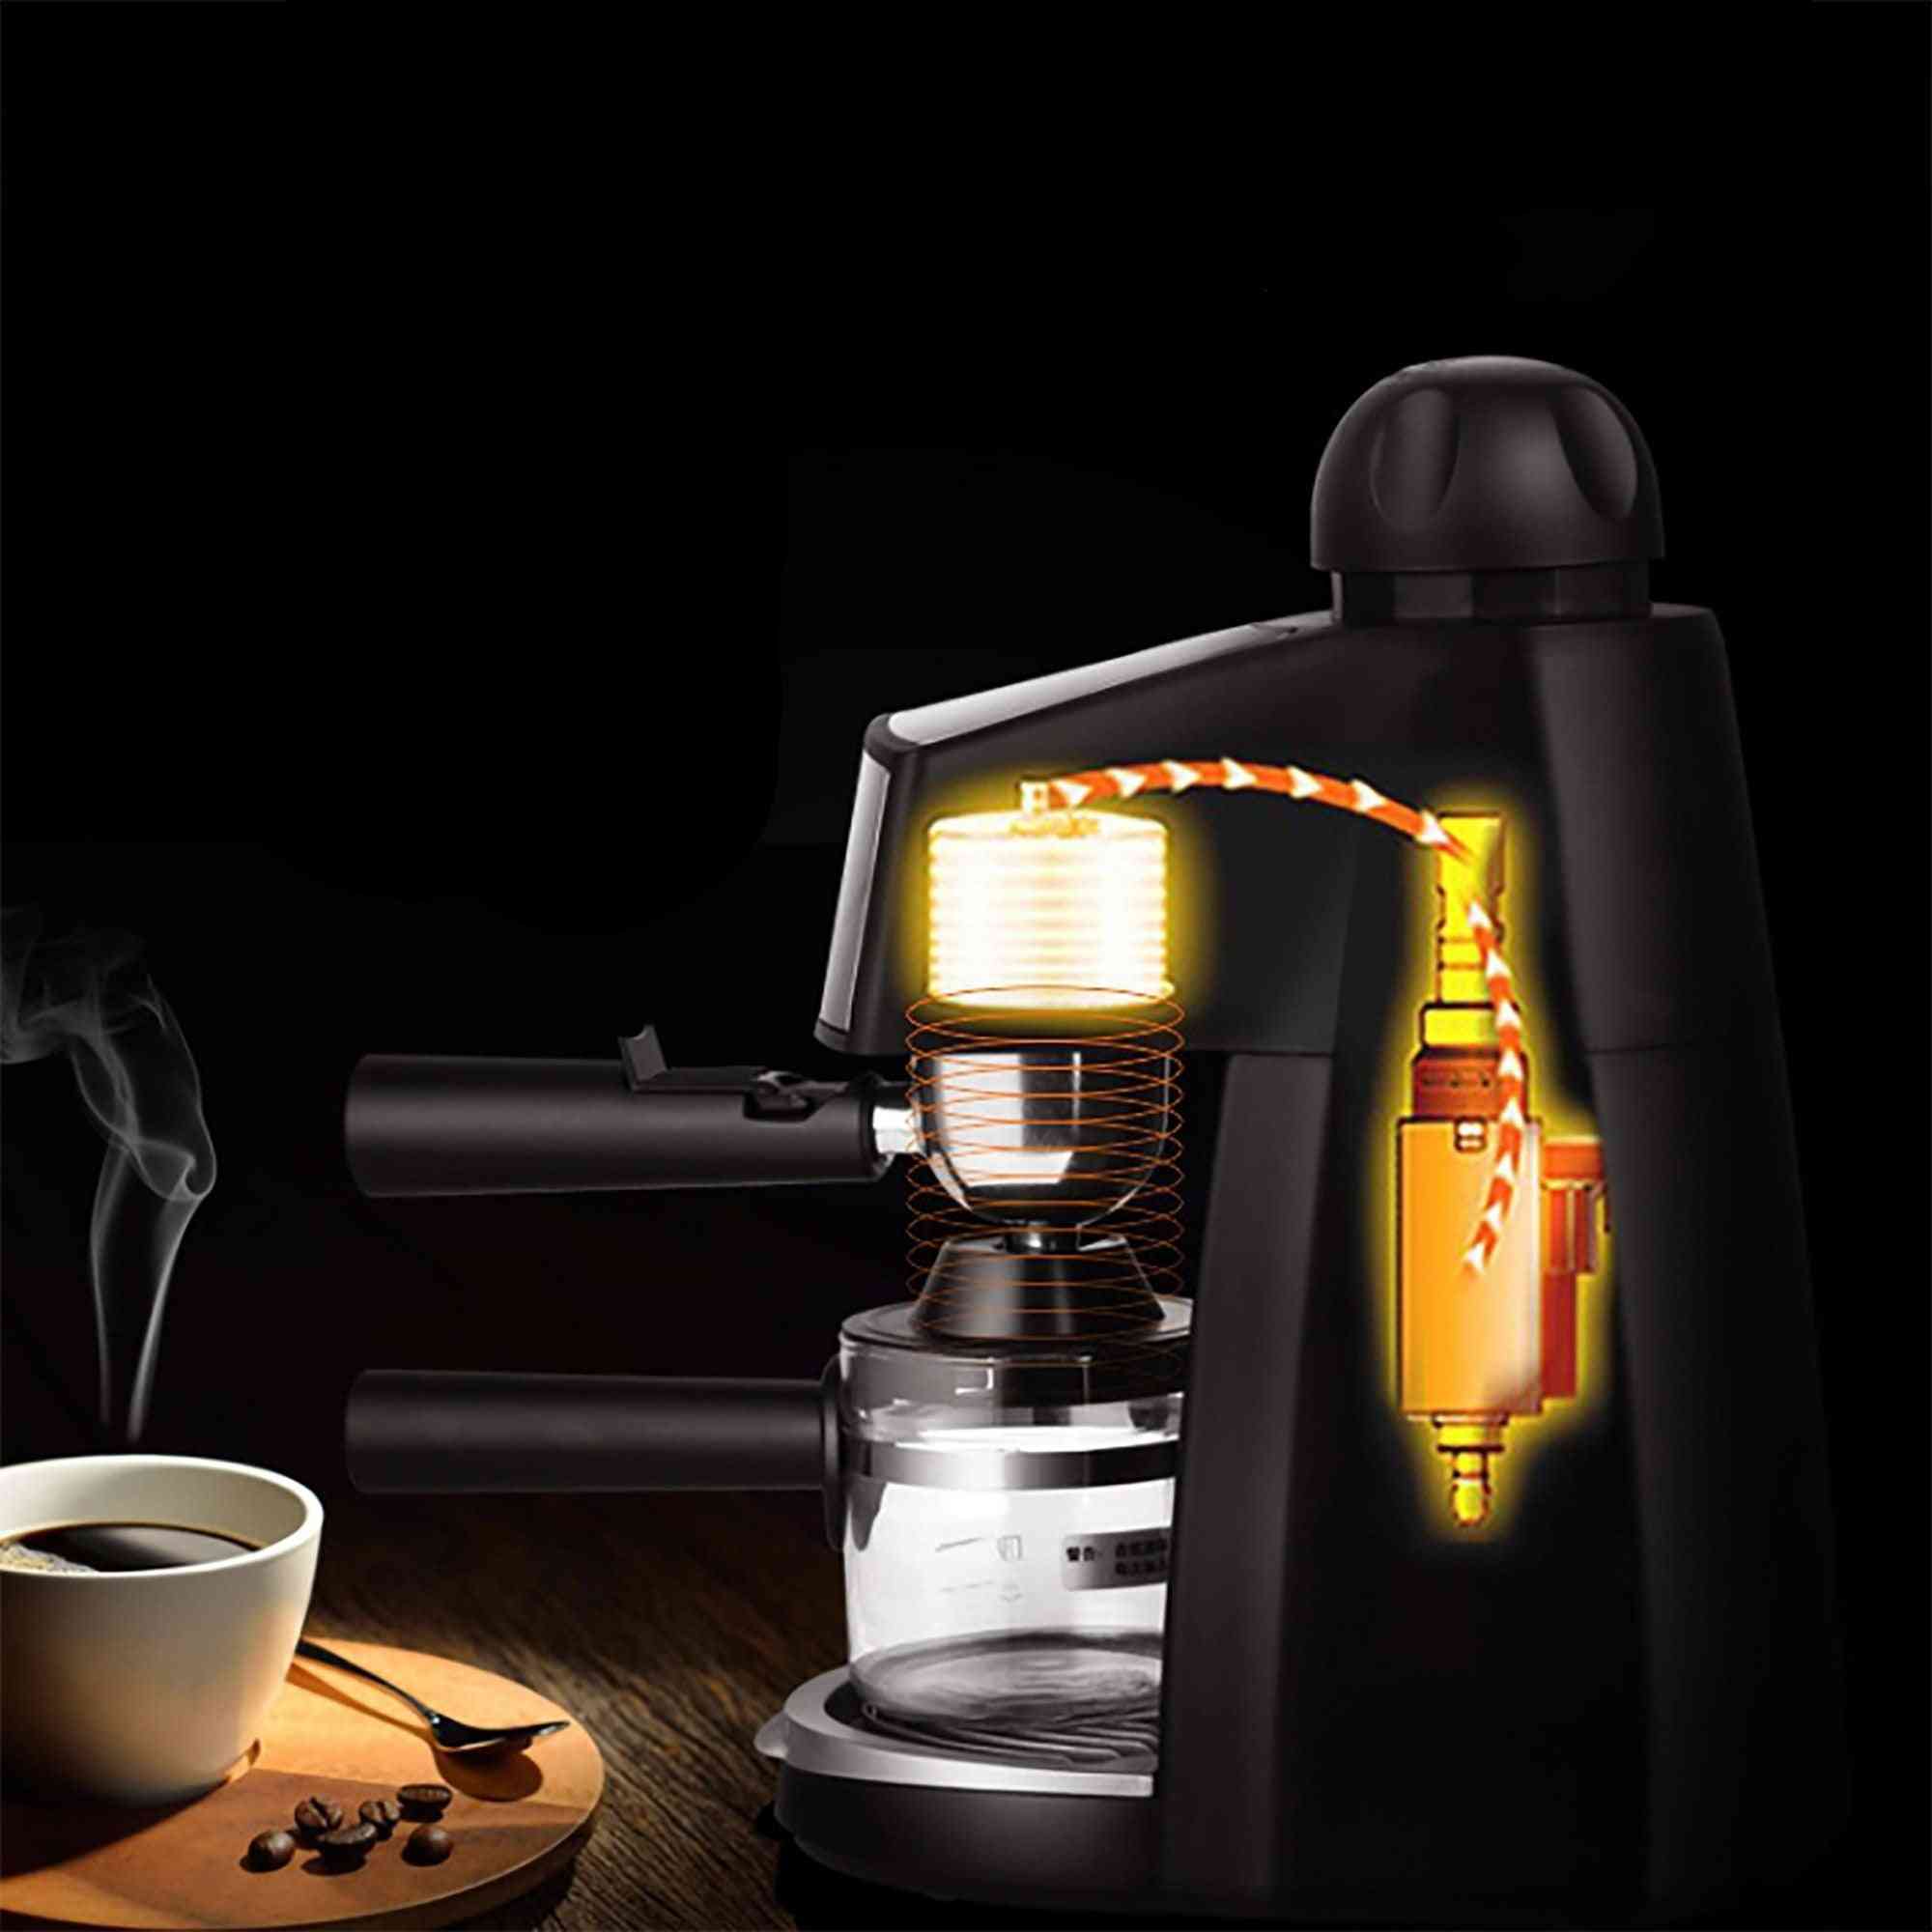 Macchina per caffè espresso semiautomatica elettrica